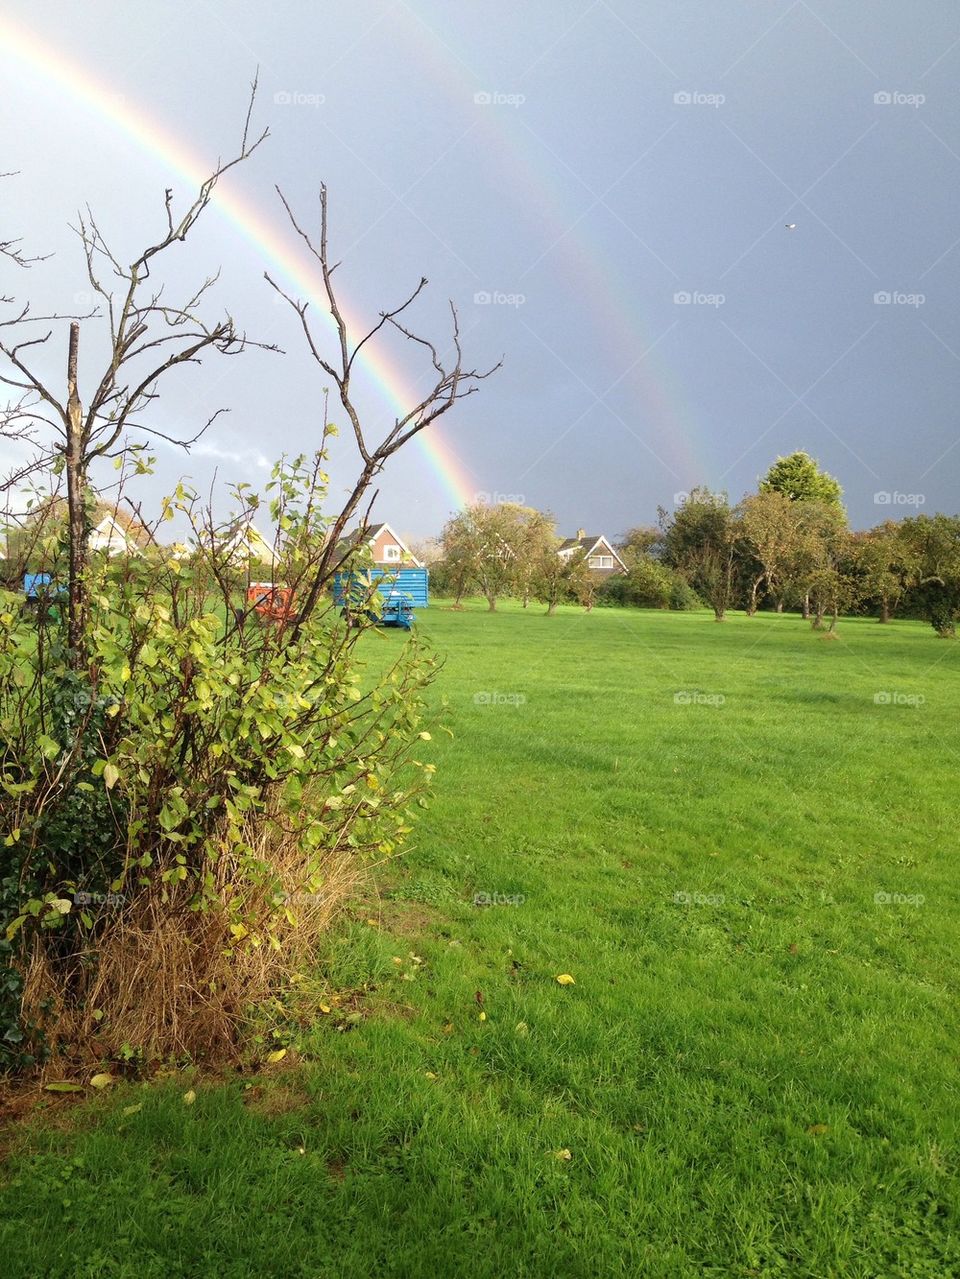 garden double rainbow norfolk uk by chippy2809